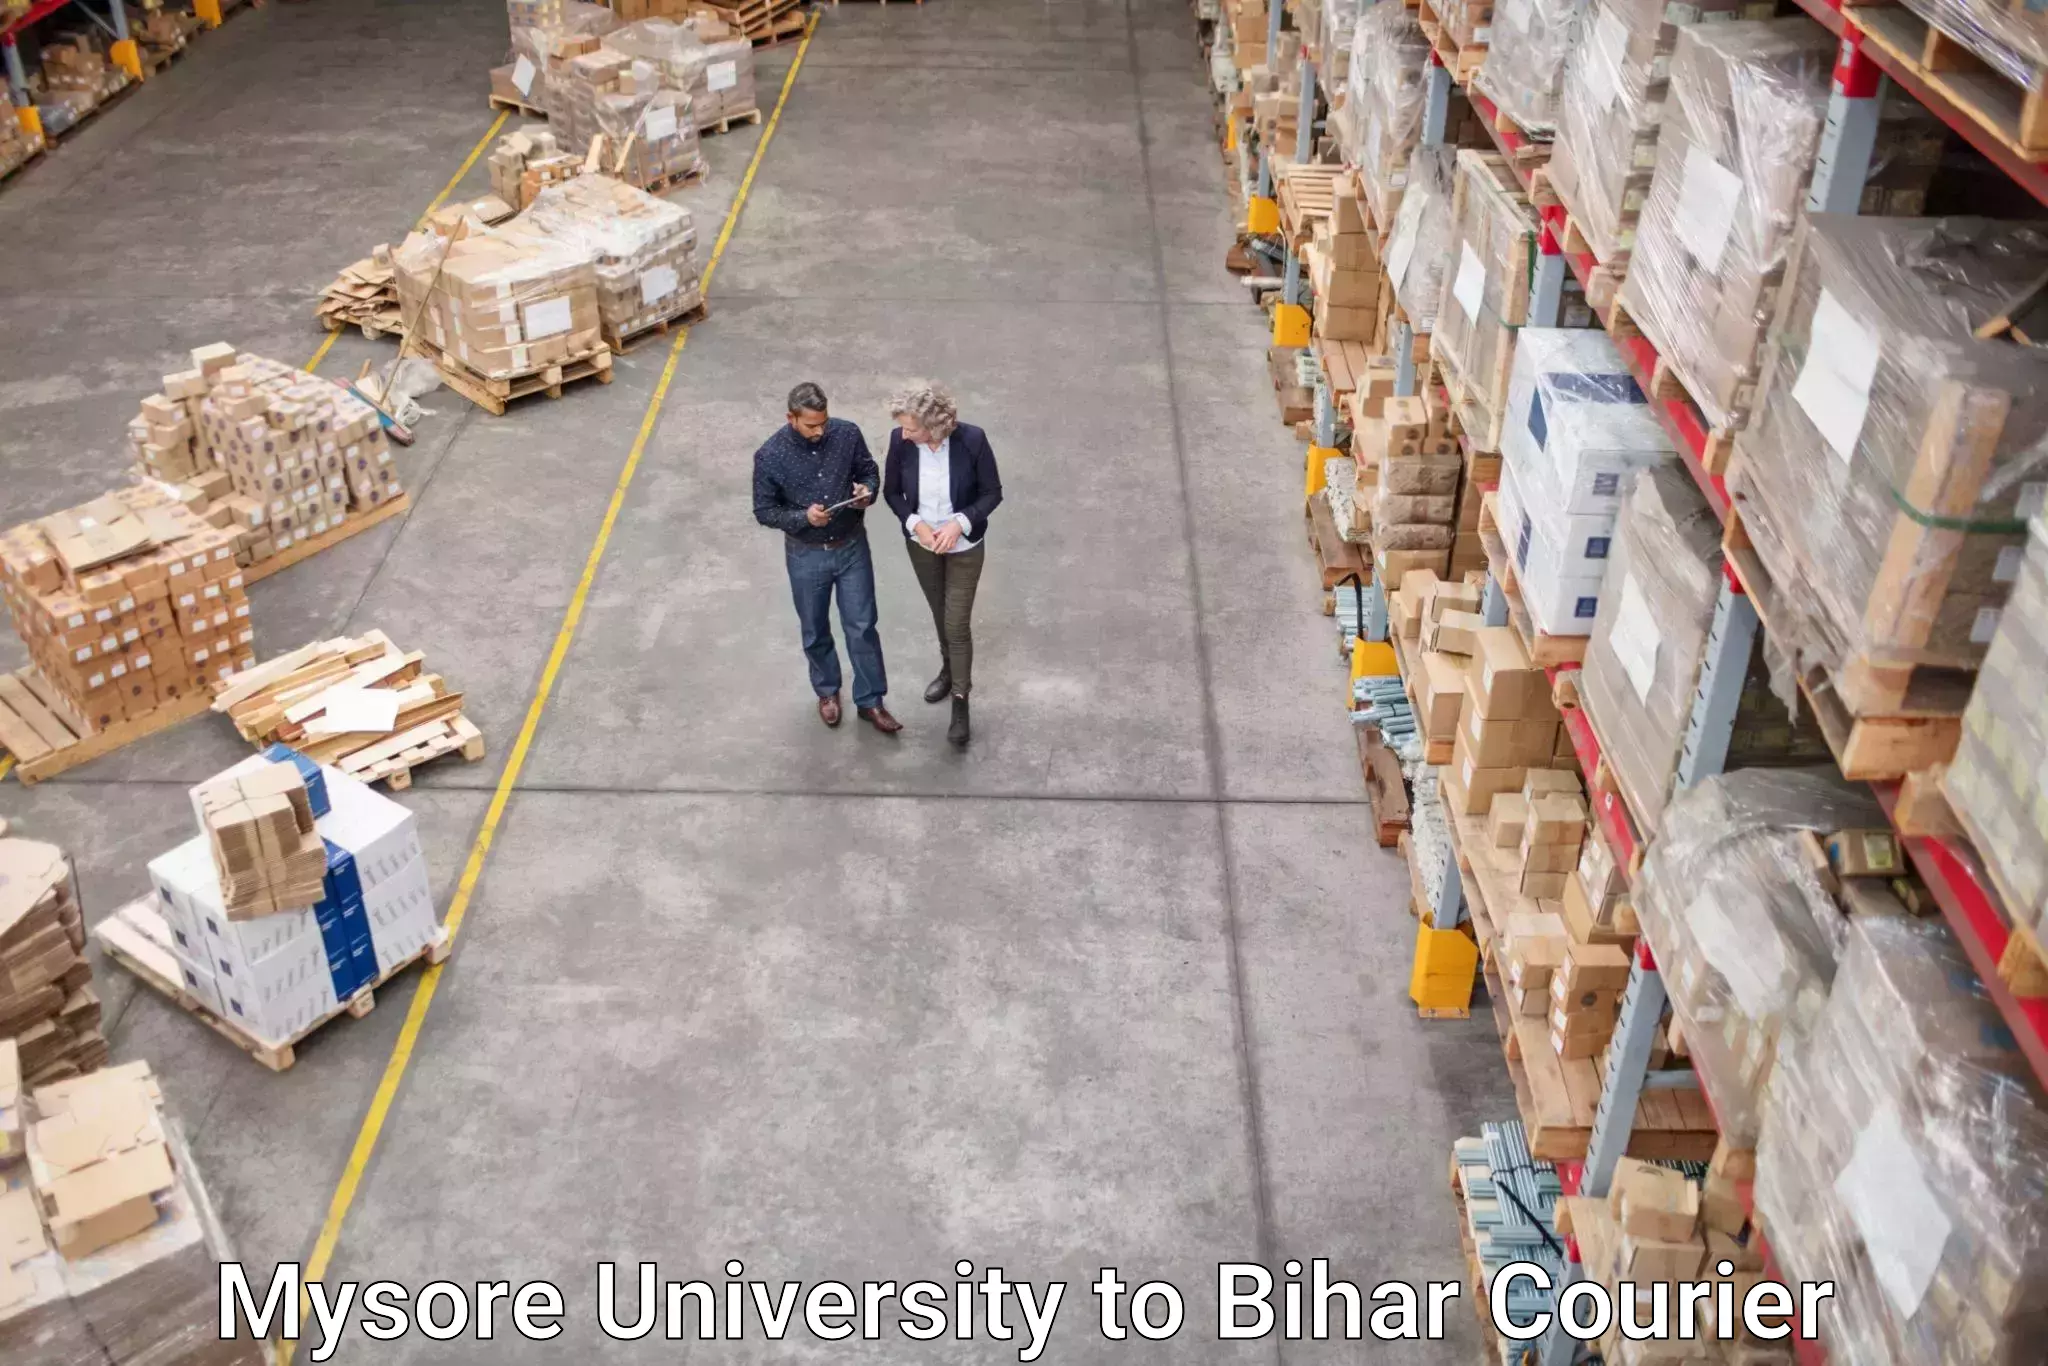 Advanced courier platforms Mysore University to Aurangabad Bihar